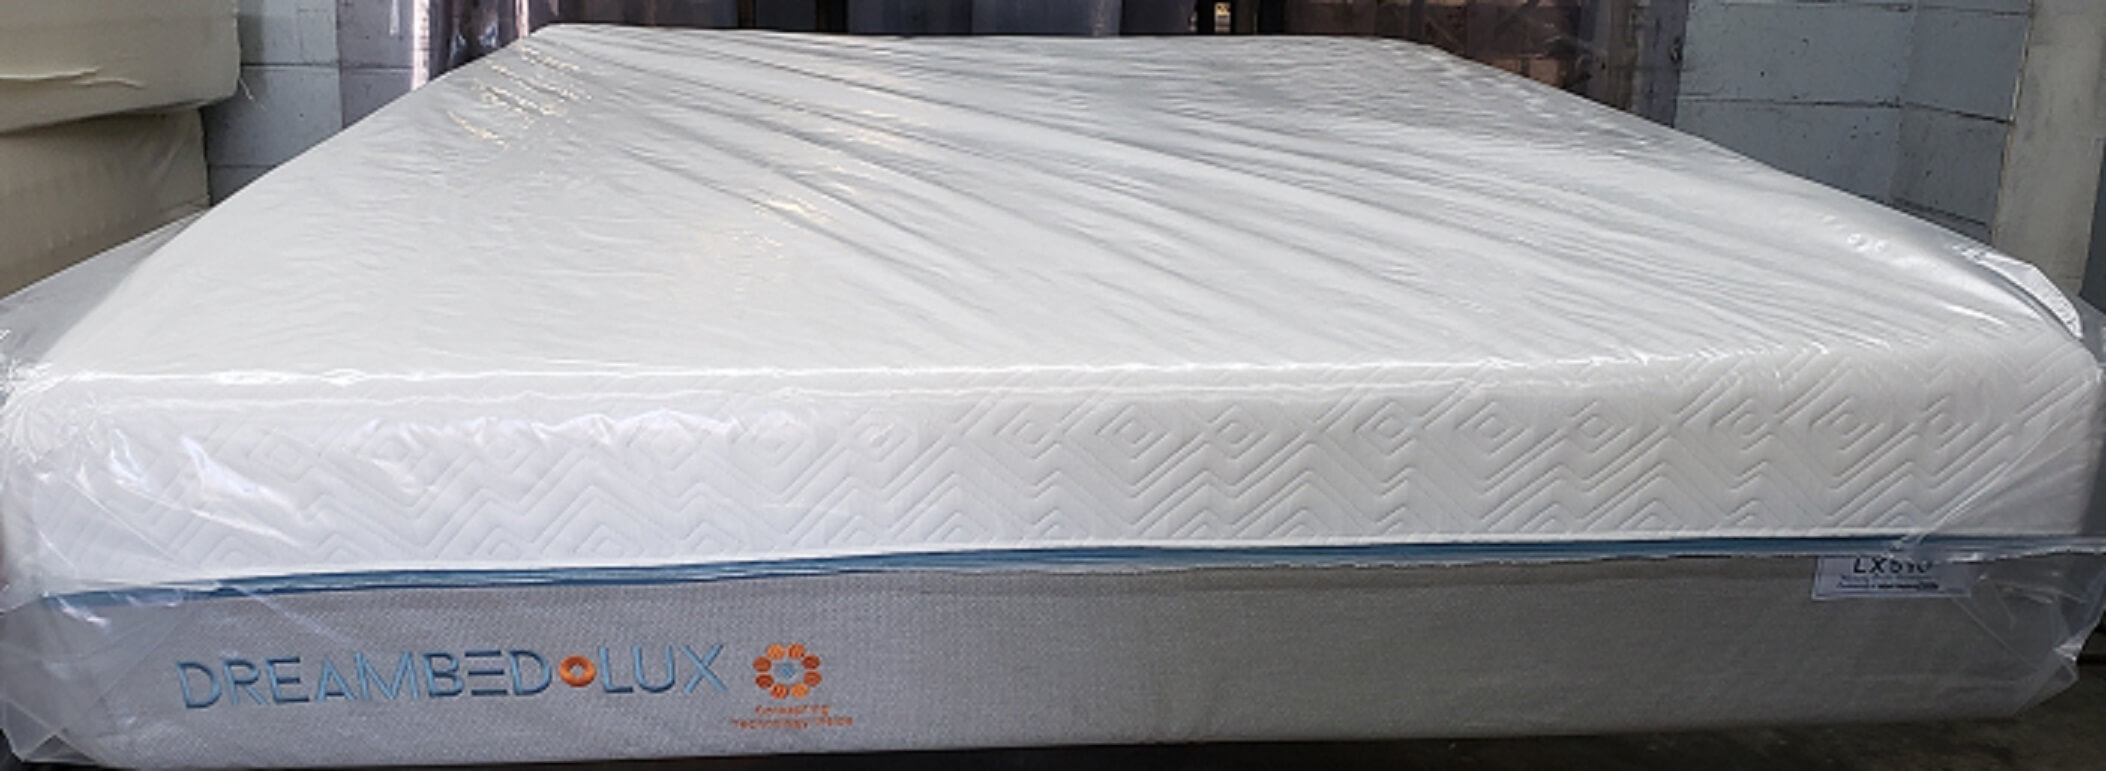 dream bed original 10 inch dream mattress